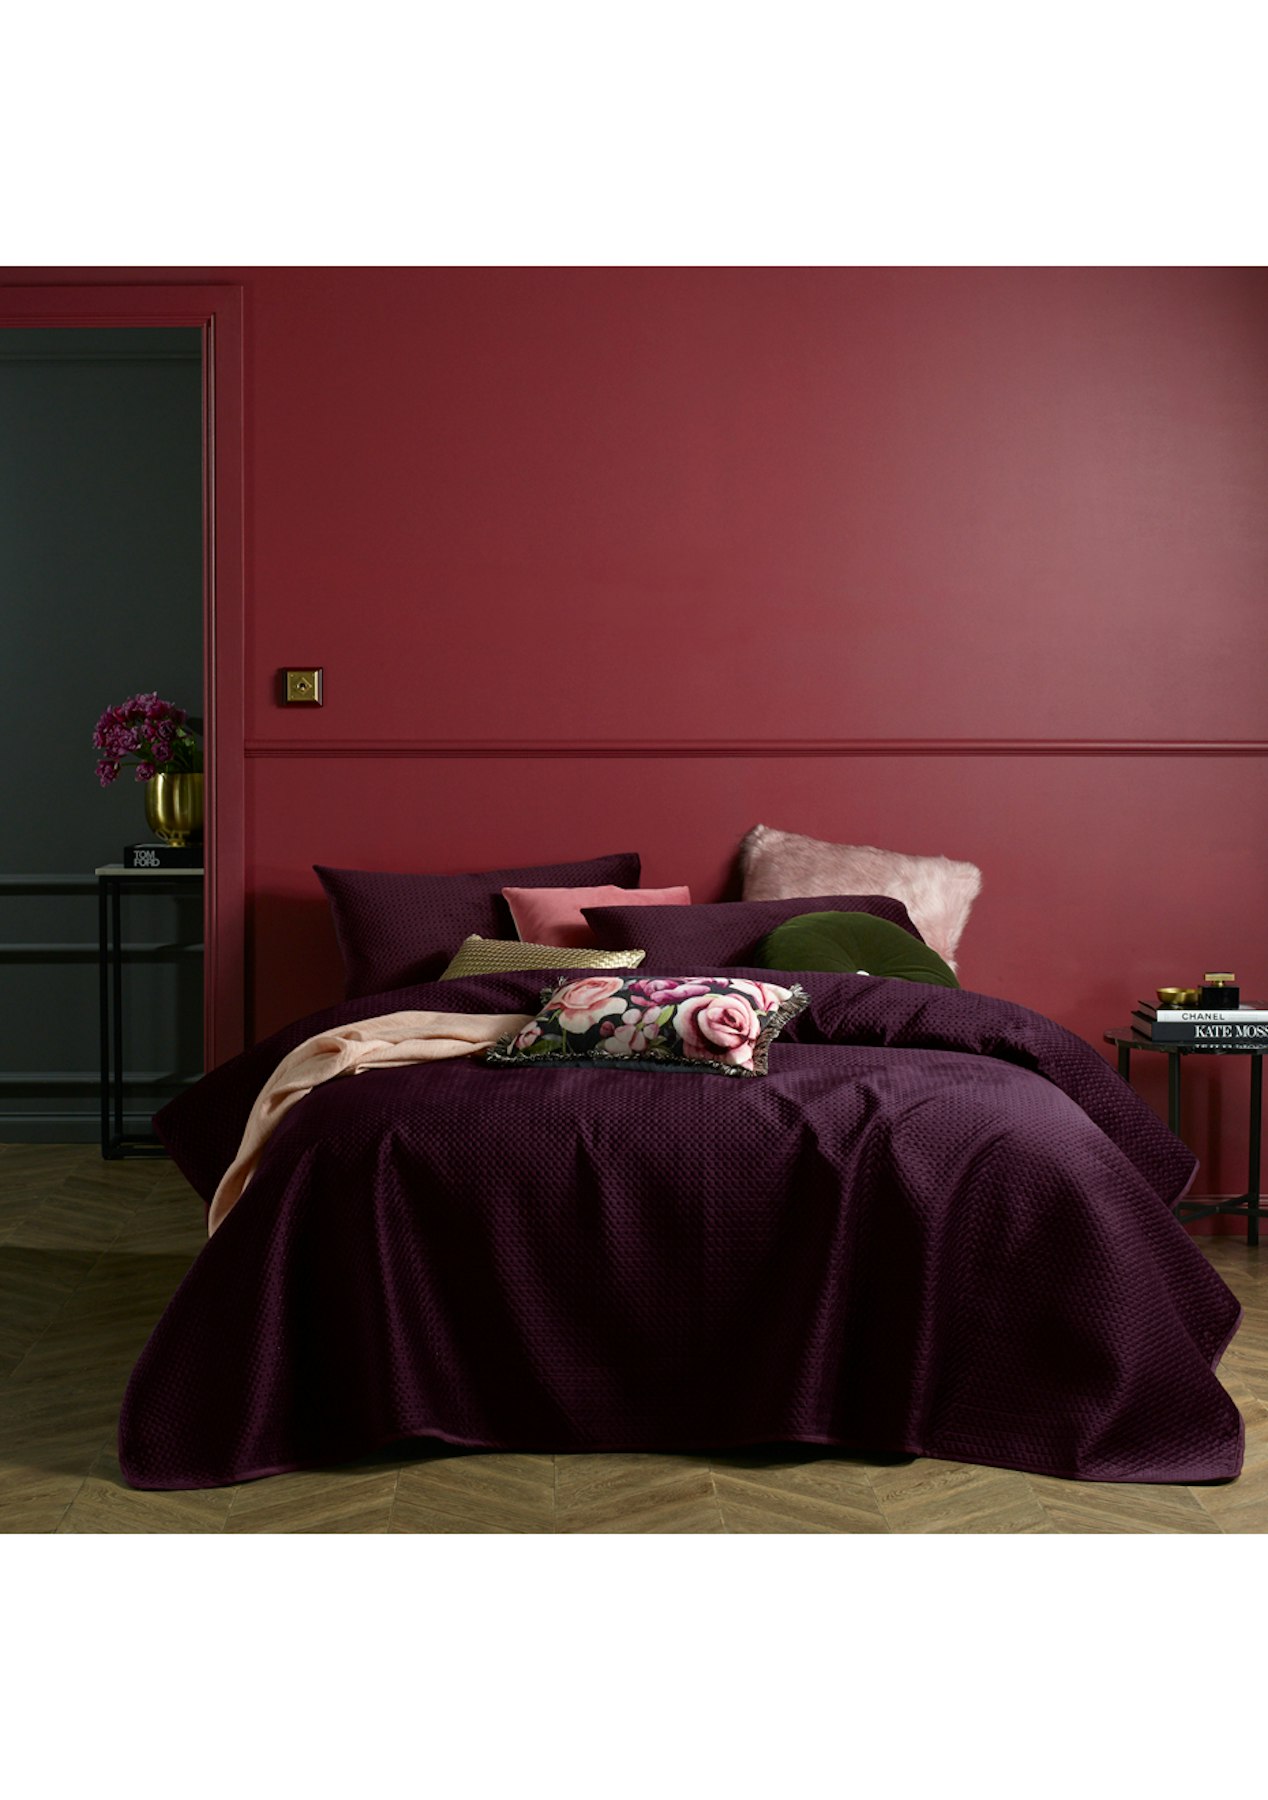 Coco Velvet Purple Coverlet Set Queen Bed Boxing Day